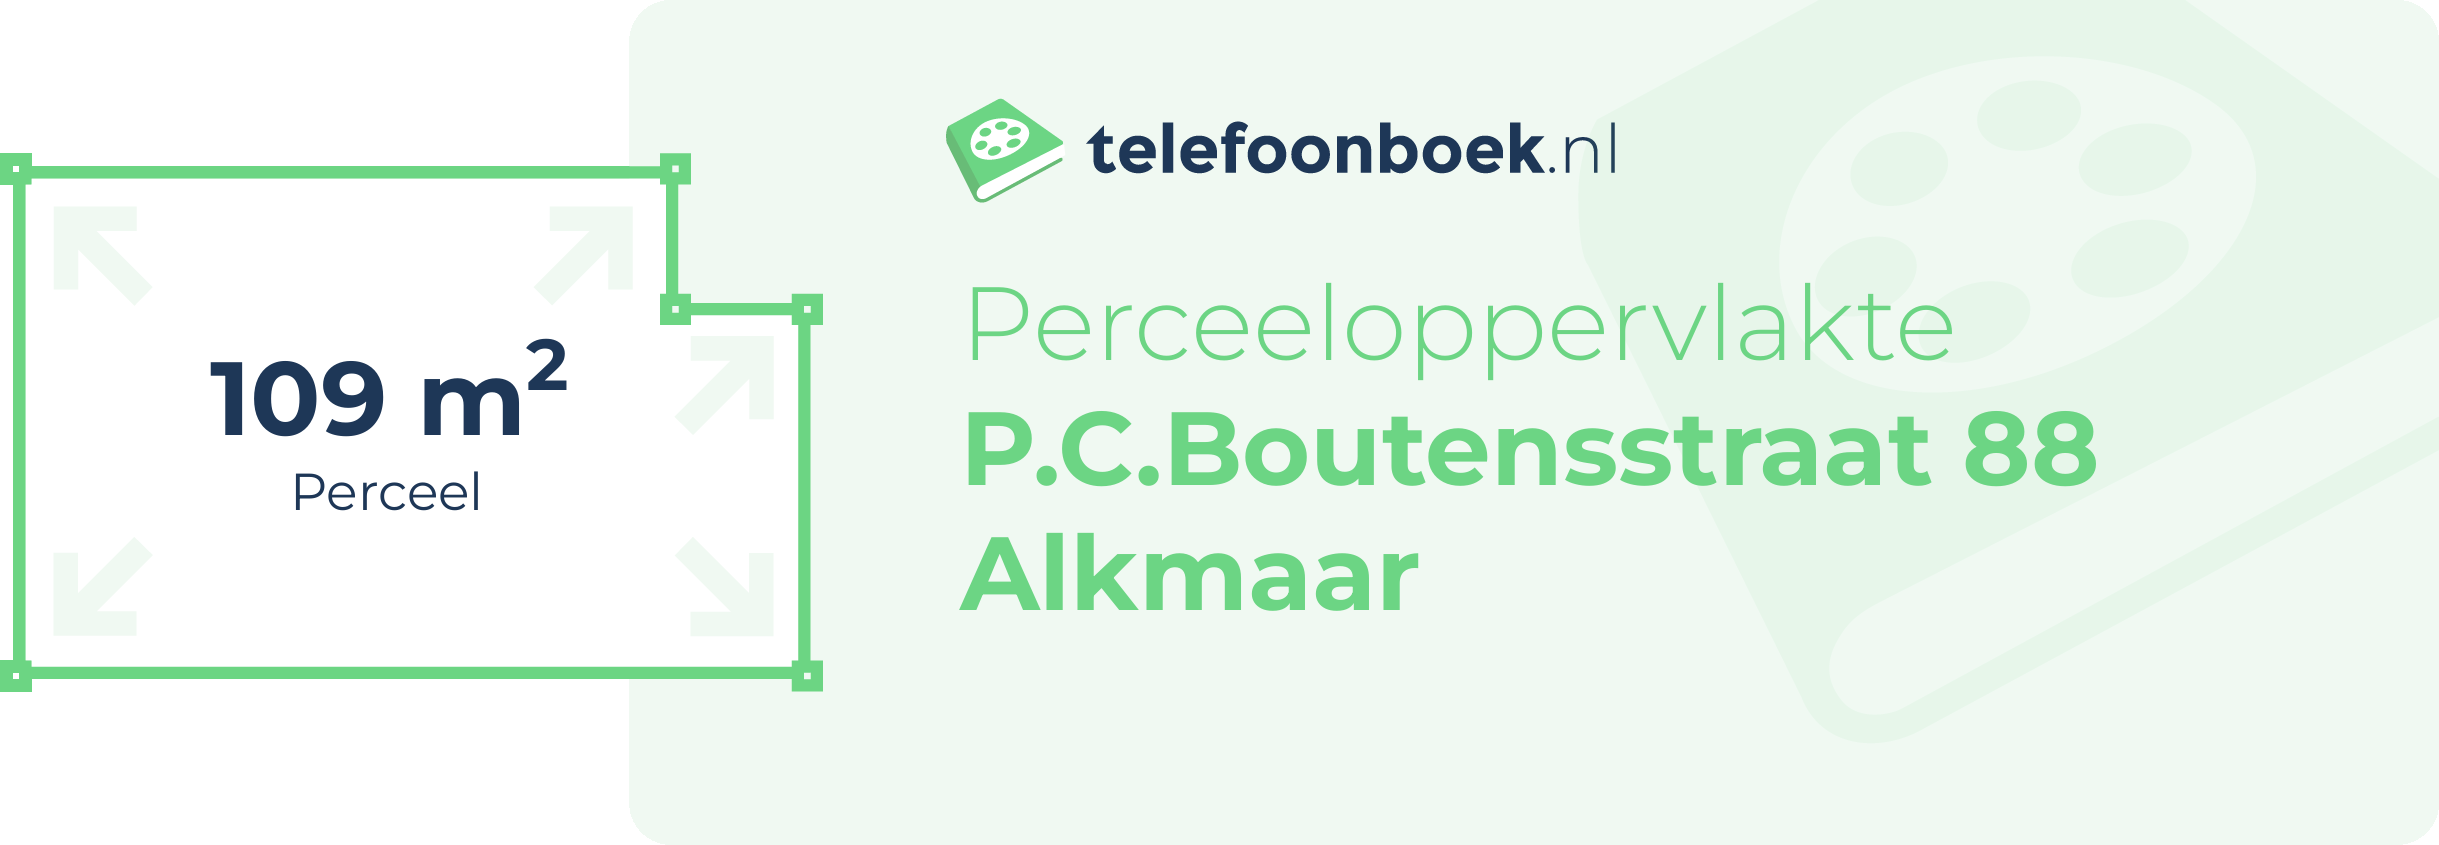 Perceeloppervlakte P.C.Boutensstraat 88 Alkmaar